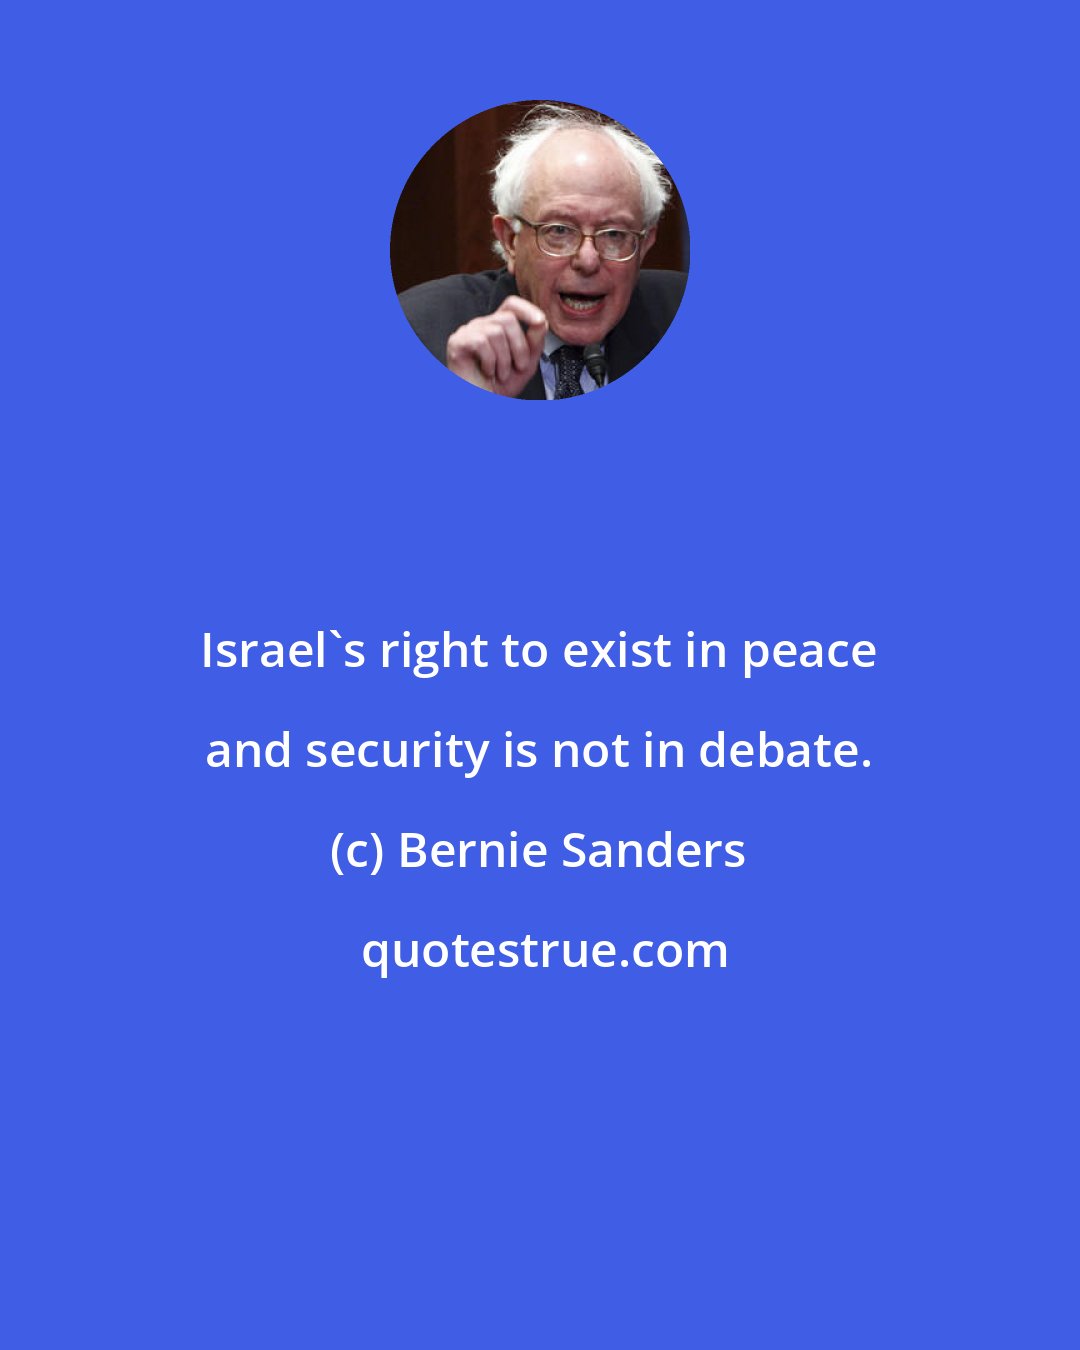 Bernie Sanders: Israel's right to exist in peace and security is not in debate.